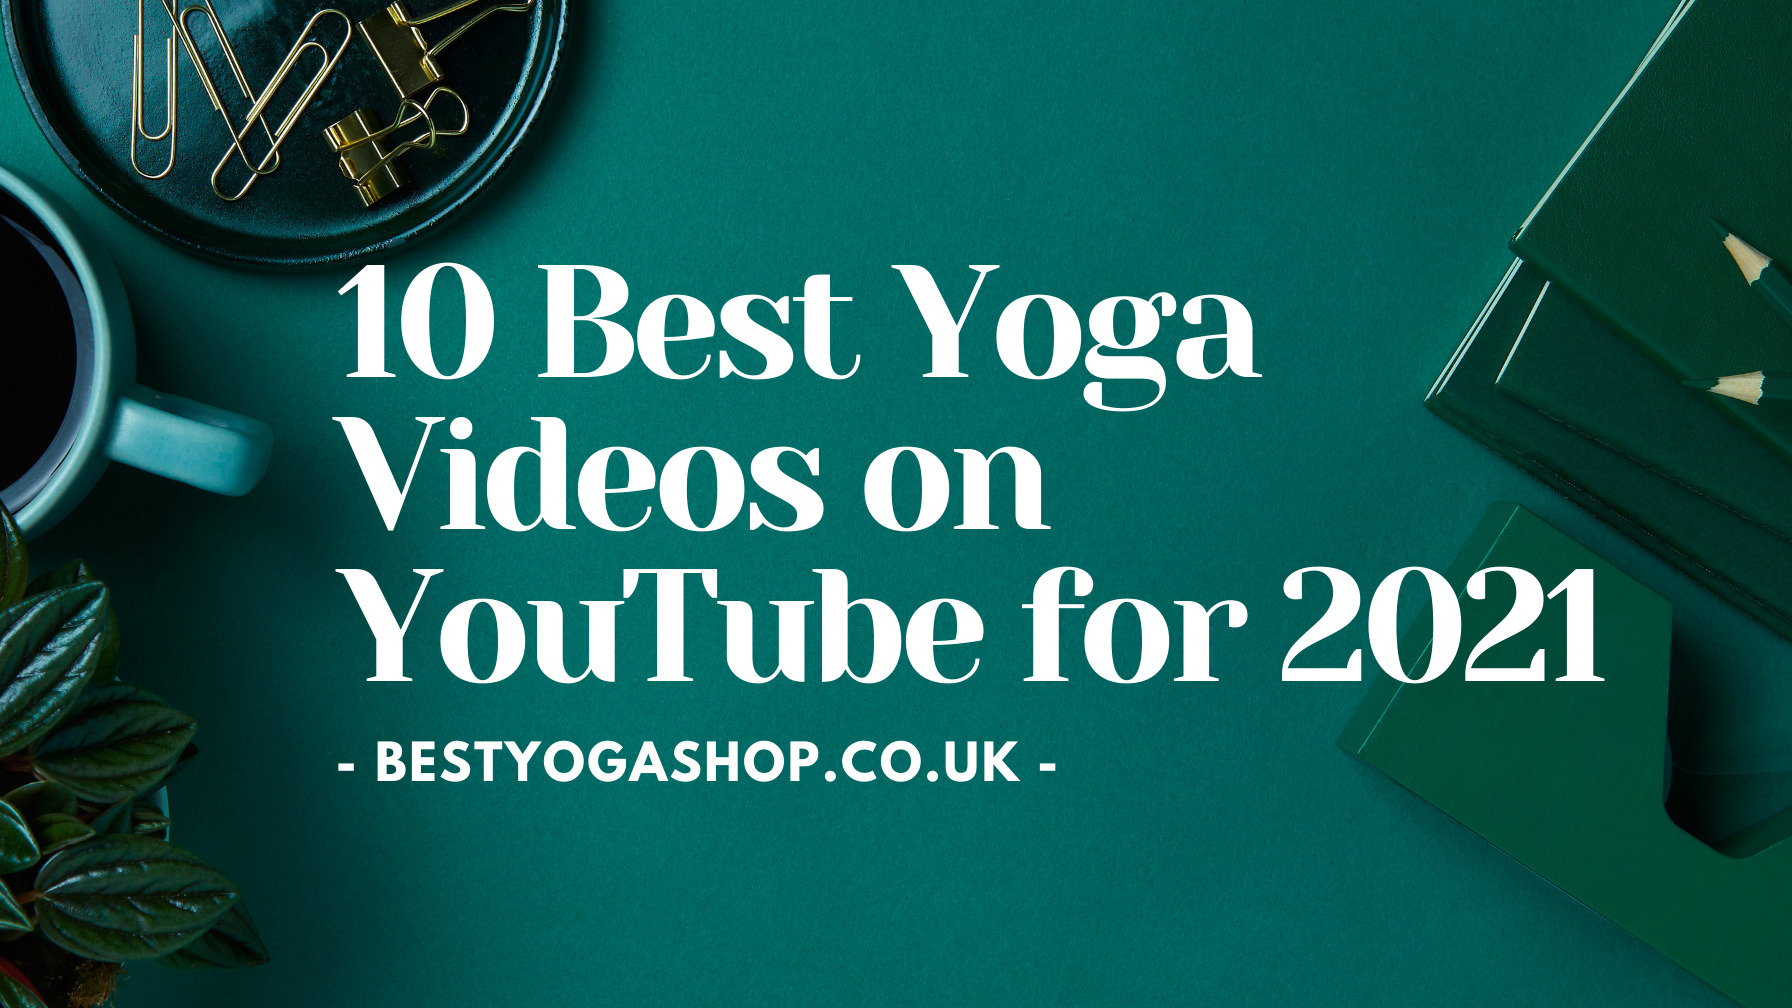 Best Yoga Videos on YouTube